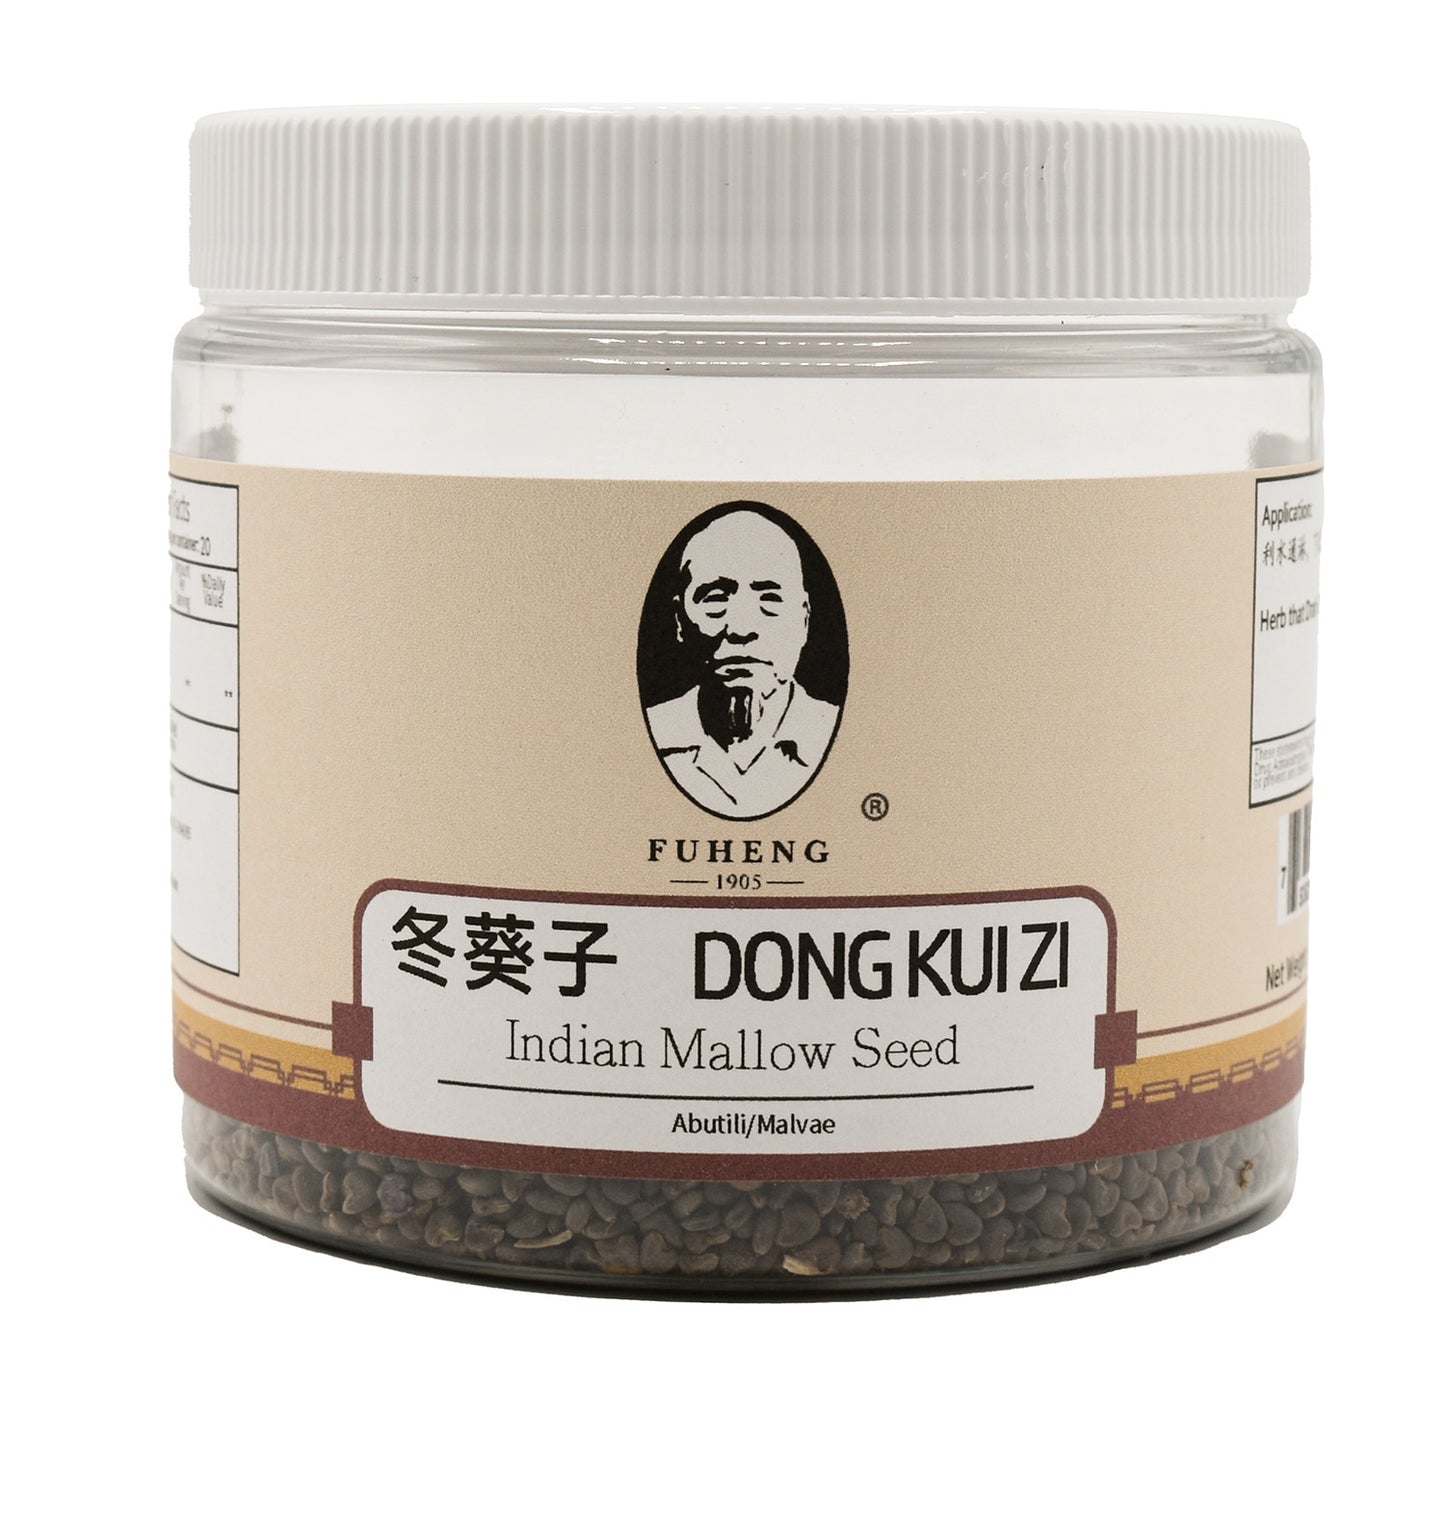 DONG KUI ZI - 冬葵子 - Indian Mallow Seed - FUHENG福恒 - Since 1905- 100g